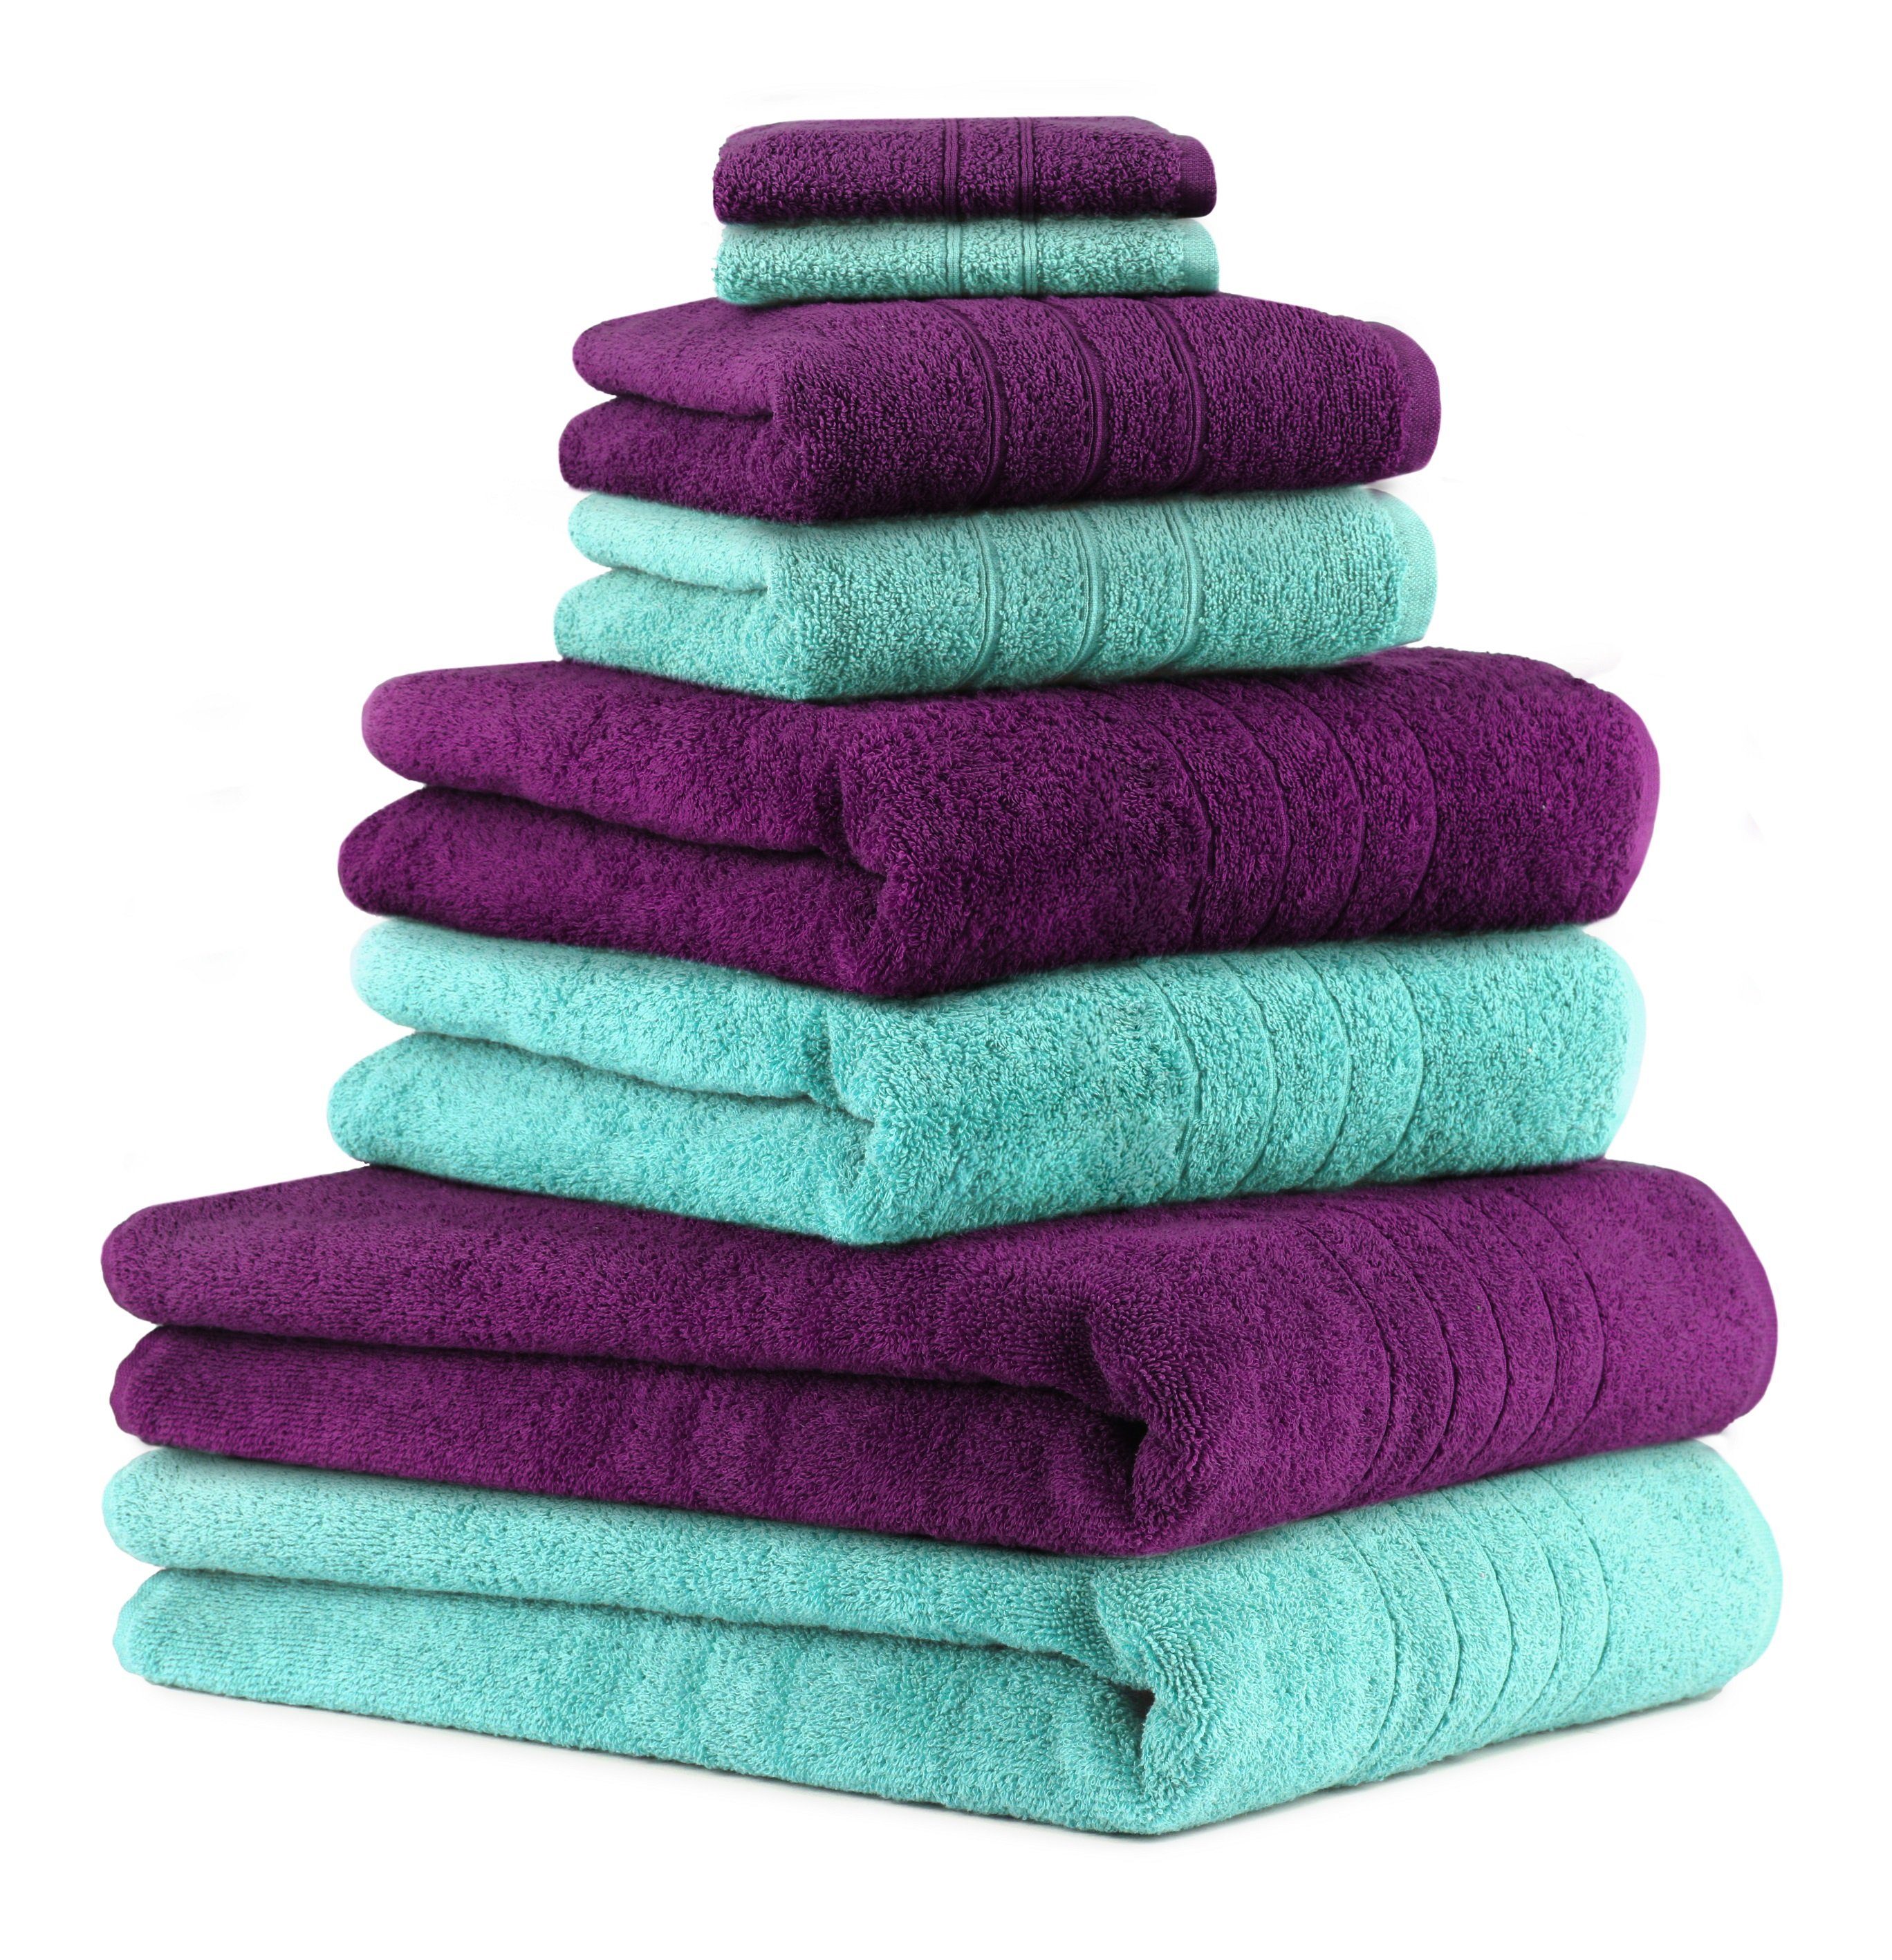 Betz Handtuch Set 8-TLG. Handtuch-Set Deluxe 100% Baumwolle 2 Badetücher 2 Duschtücher 2 Handtücher 2 Seiftücher Farbe Pflaume und türkis, 100% Baumwolle, (8-tlg)